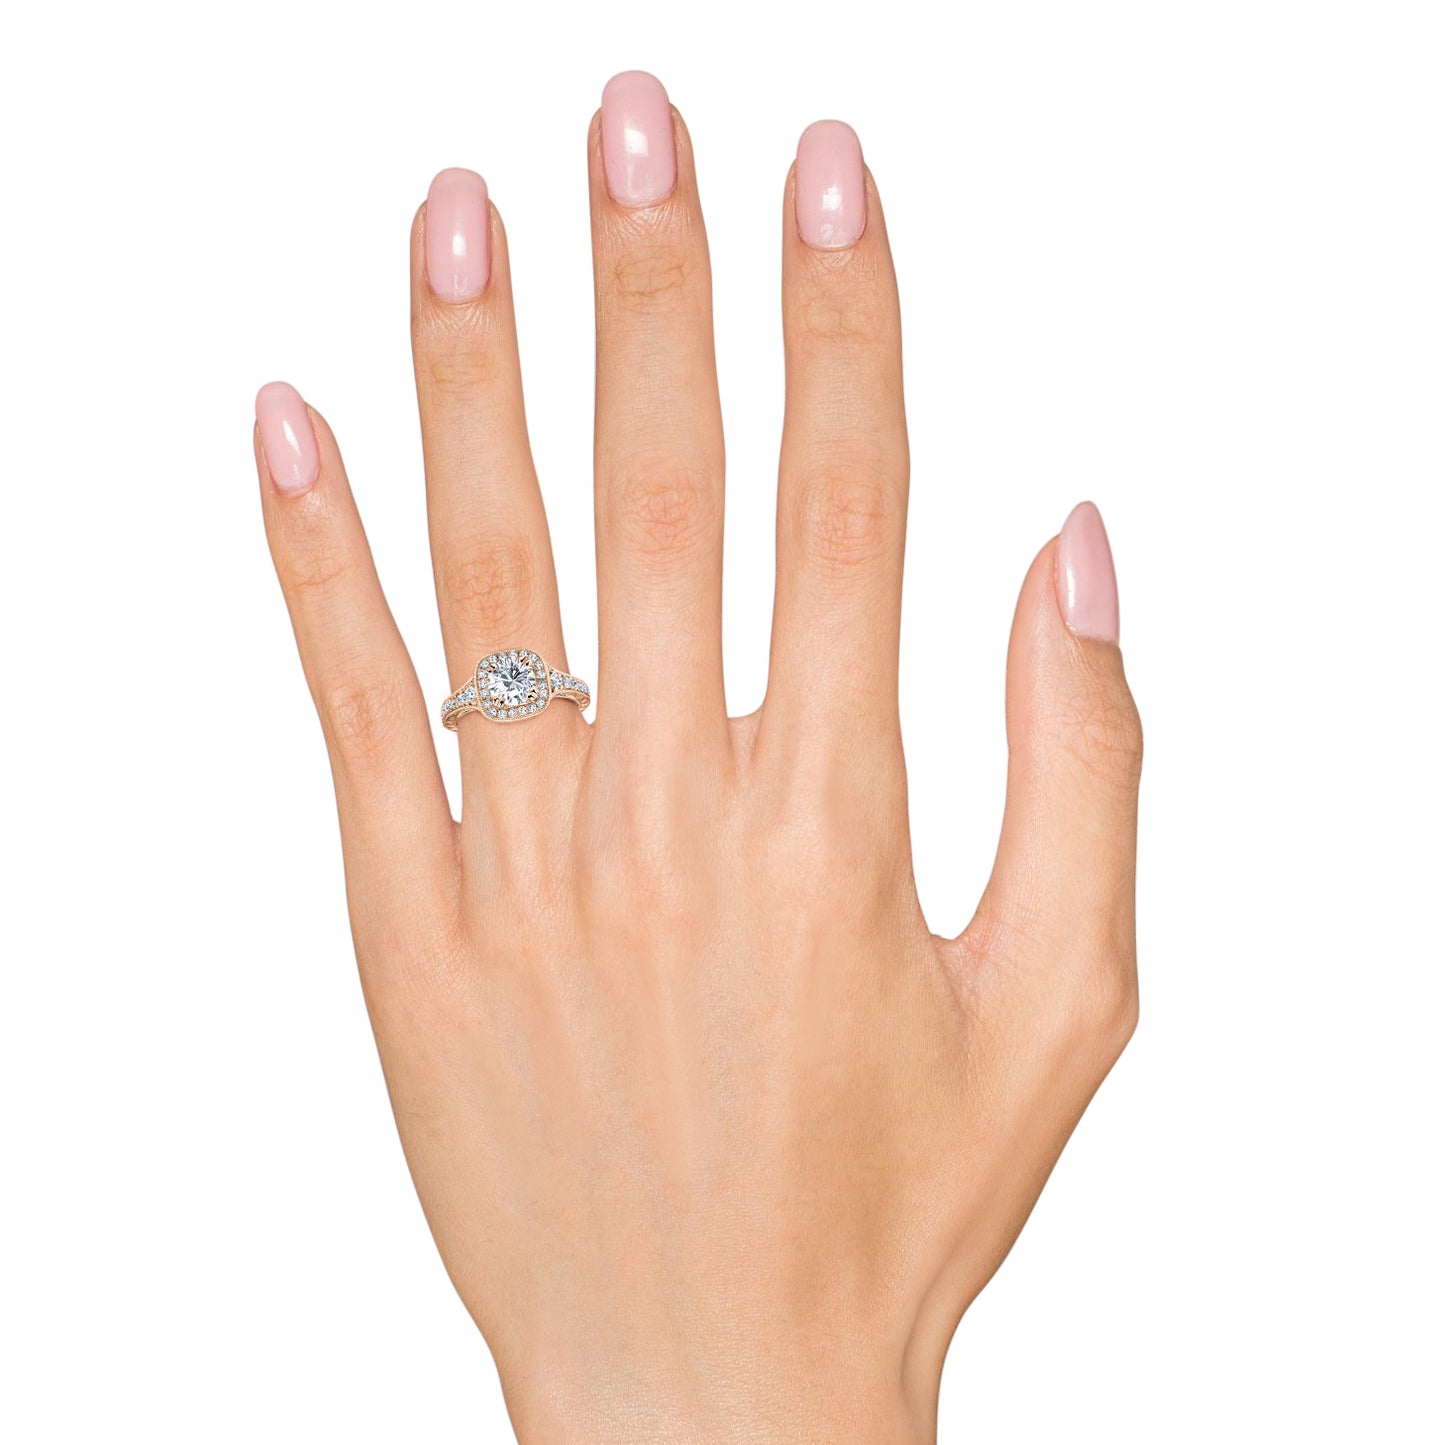 Engraved Filigree Halo Diamond Engagement Ring